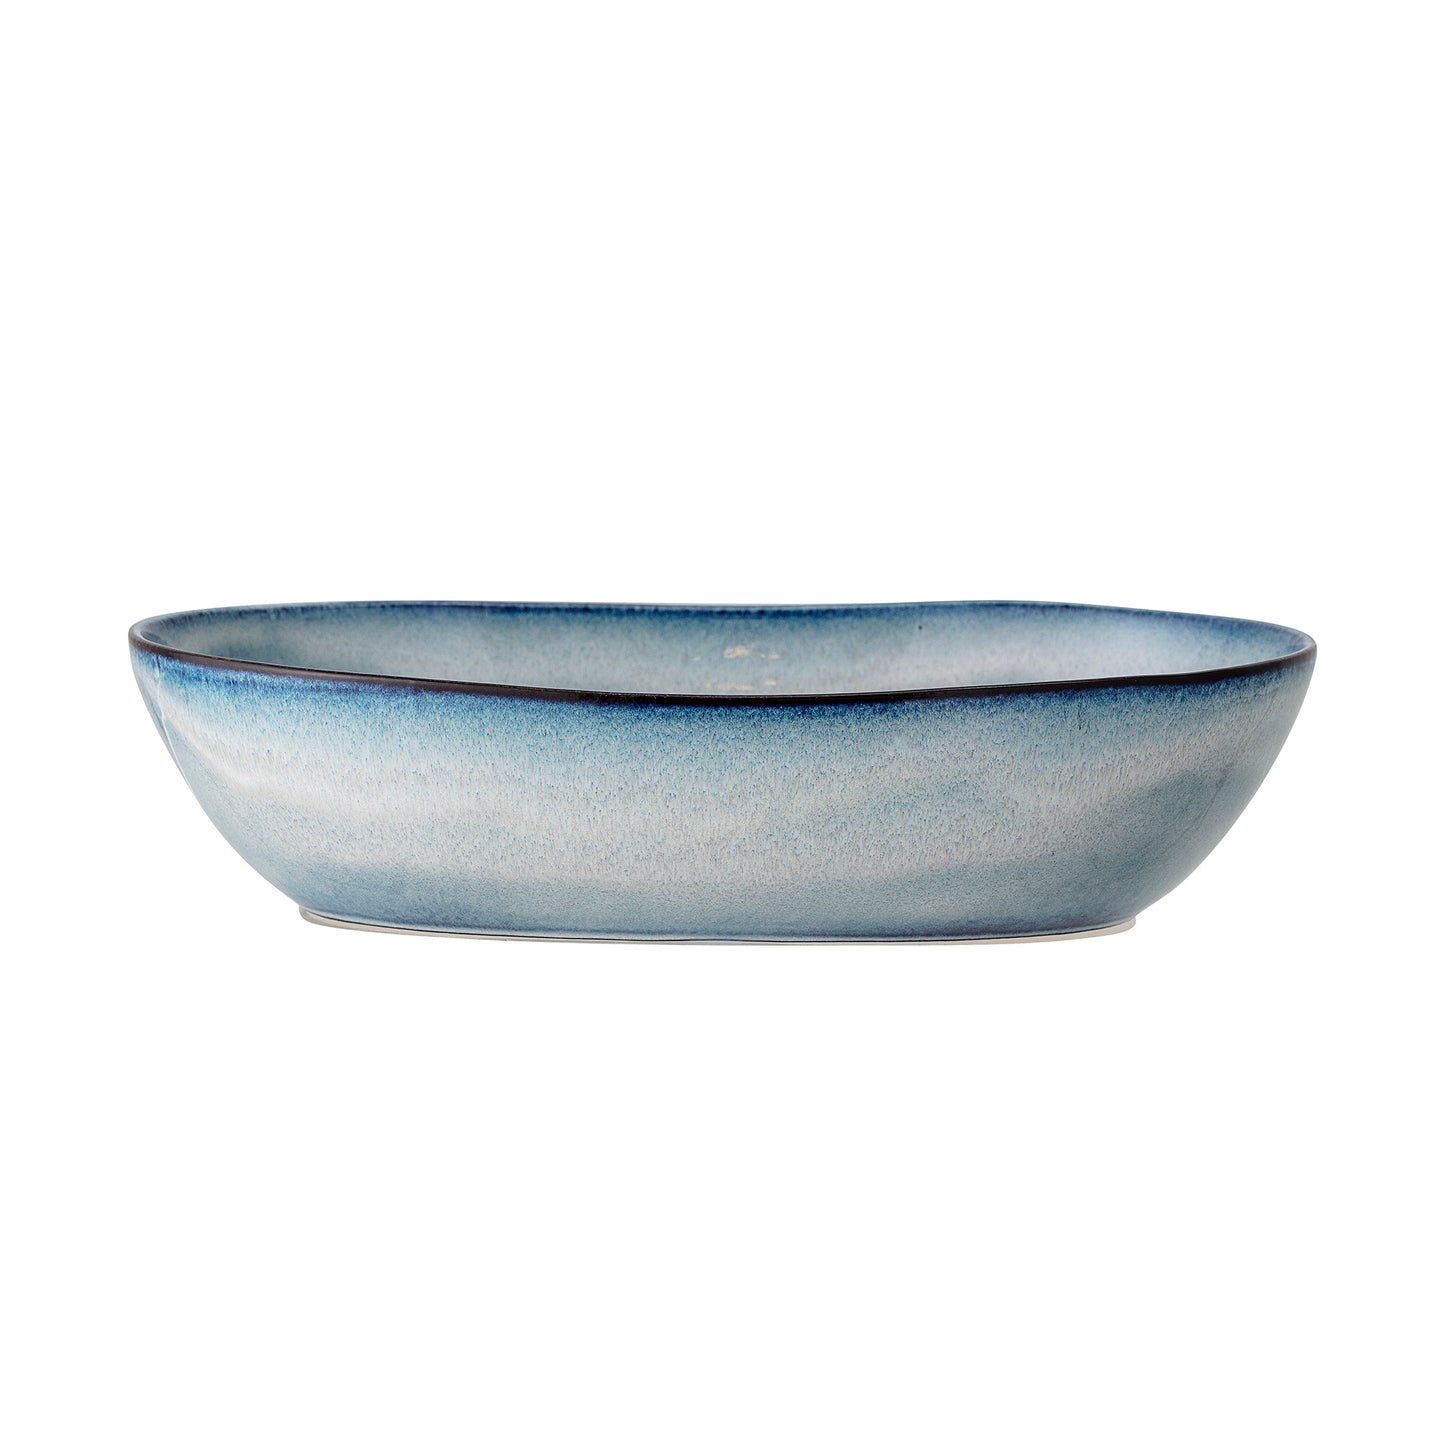 Large Serving Bowl in Blue